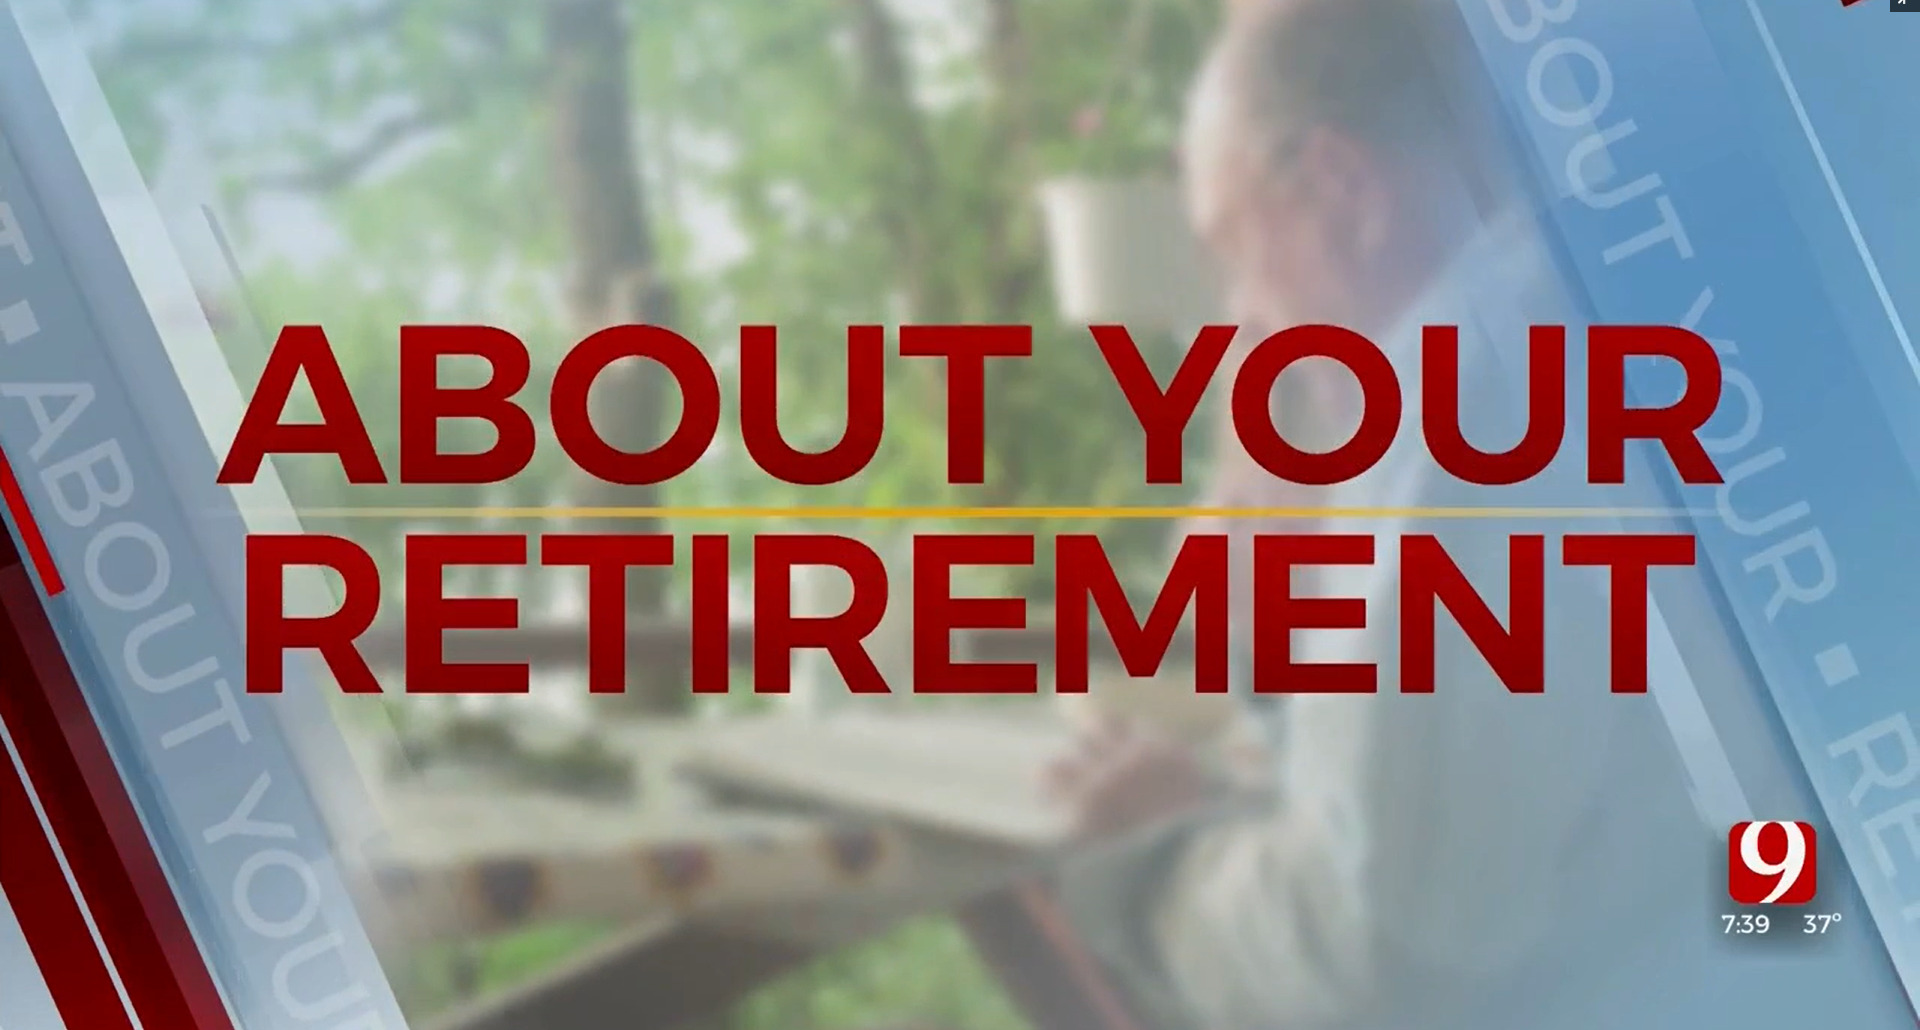 About Your Retirement: Battling Depression